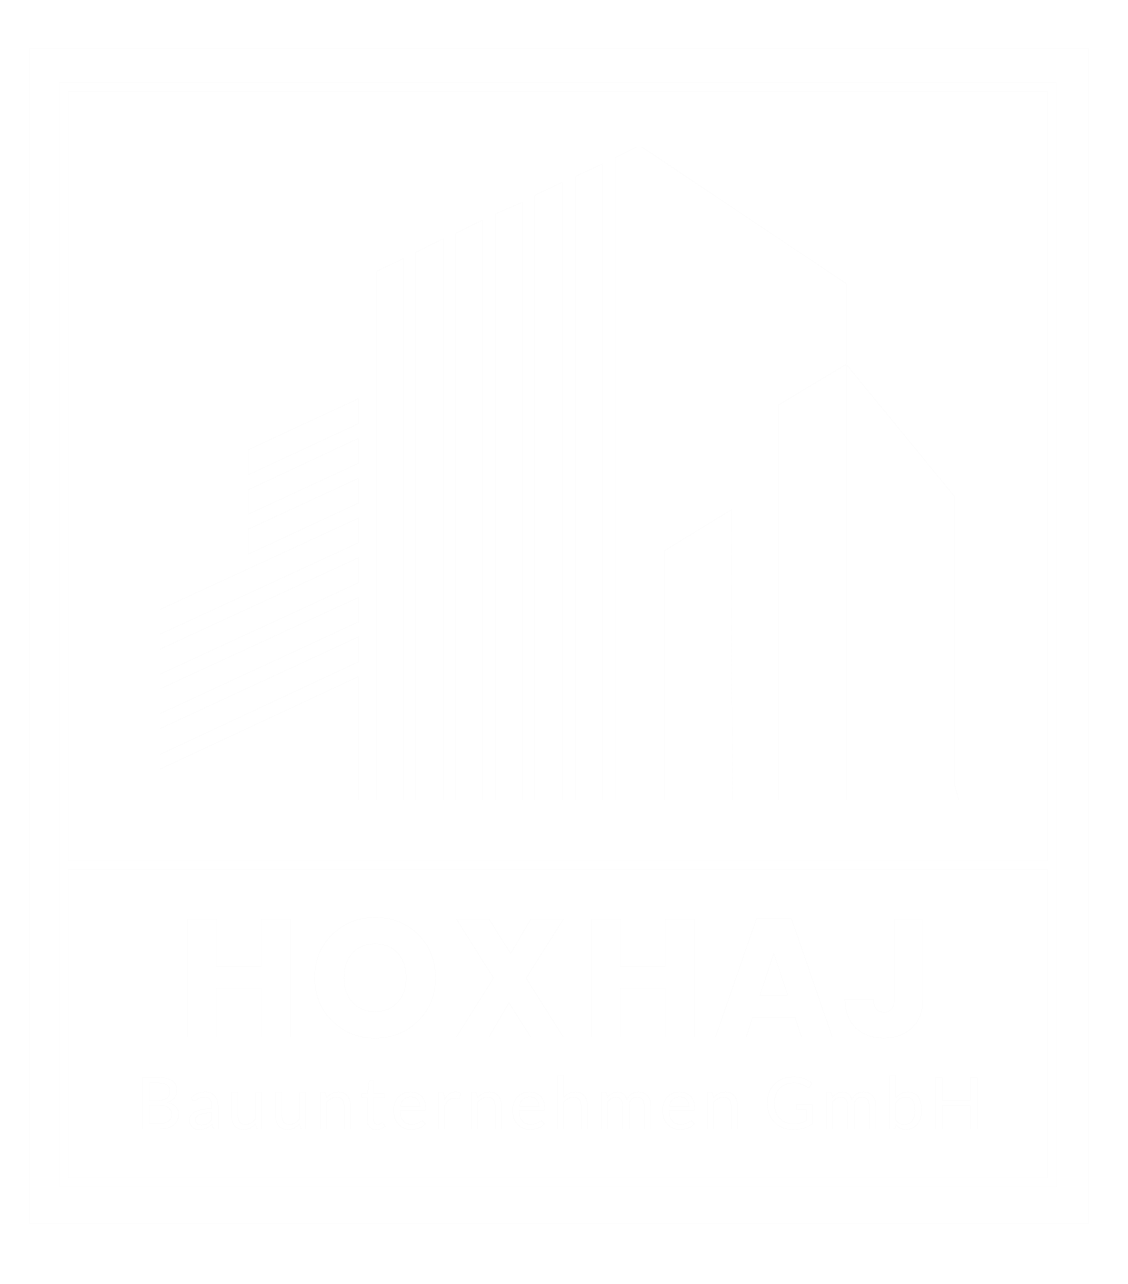 Hoxhaj Bauunternehmen GmbH